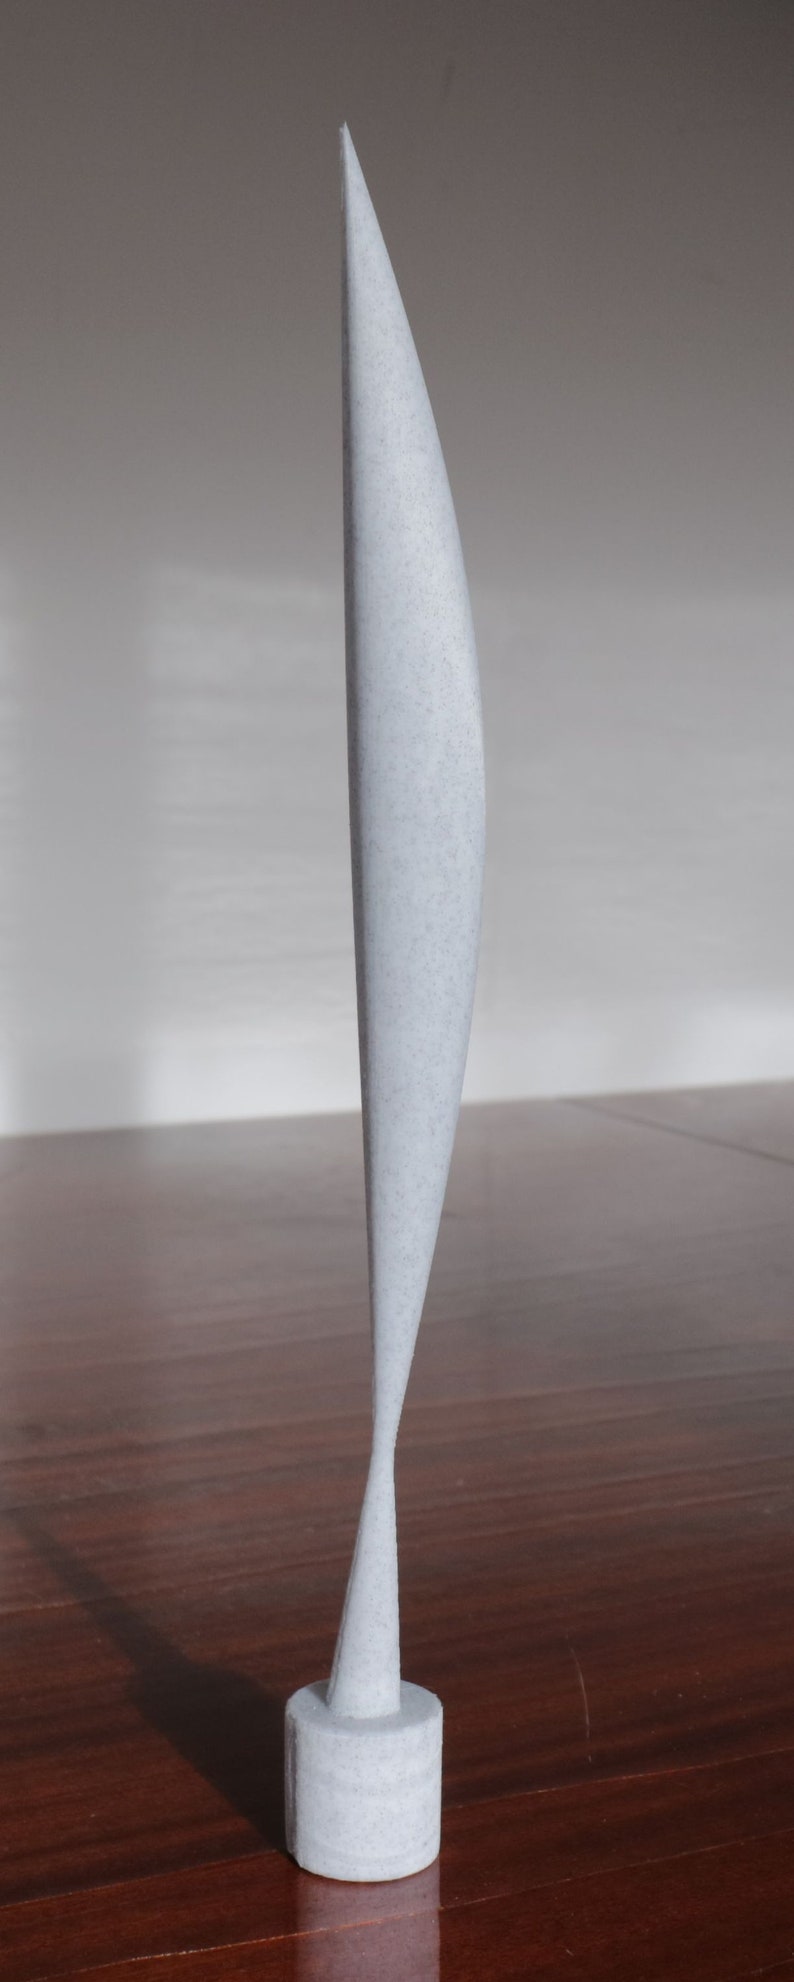 Reproduction imprimée en 3D de la sculpture Bird in Space de Constantin Brancusi Gray marble